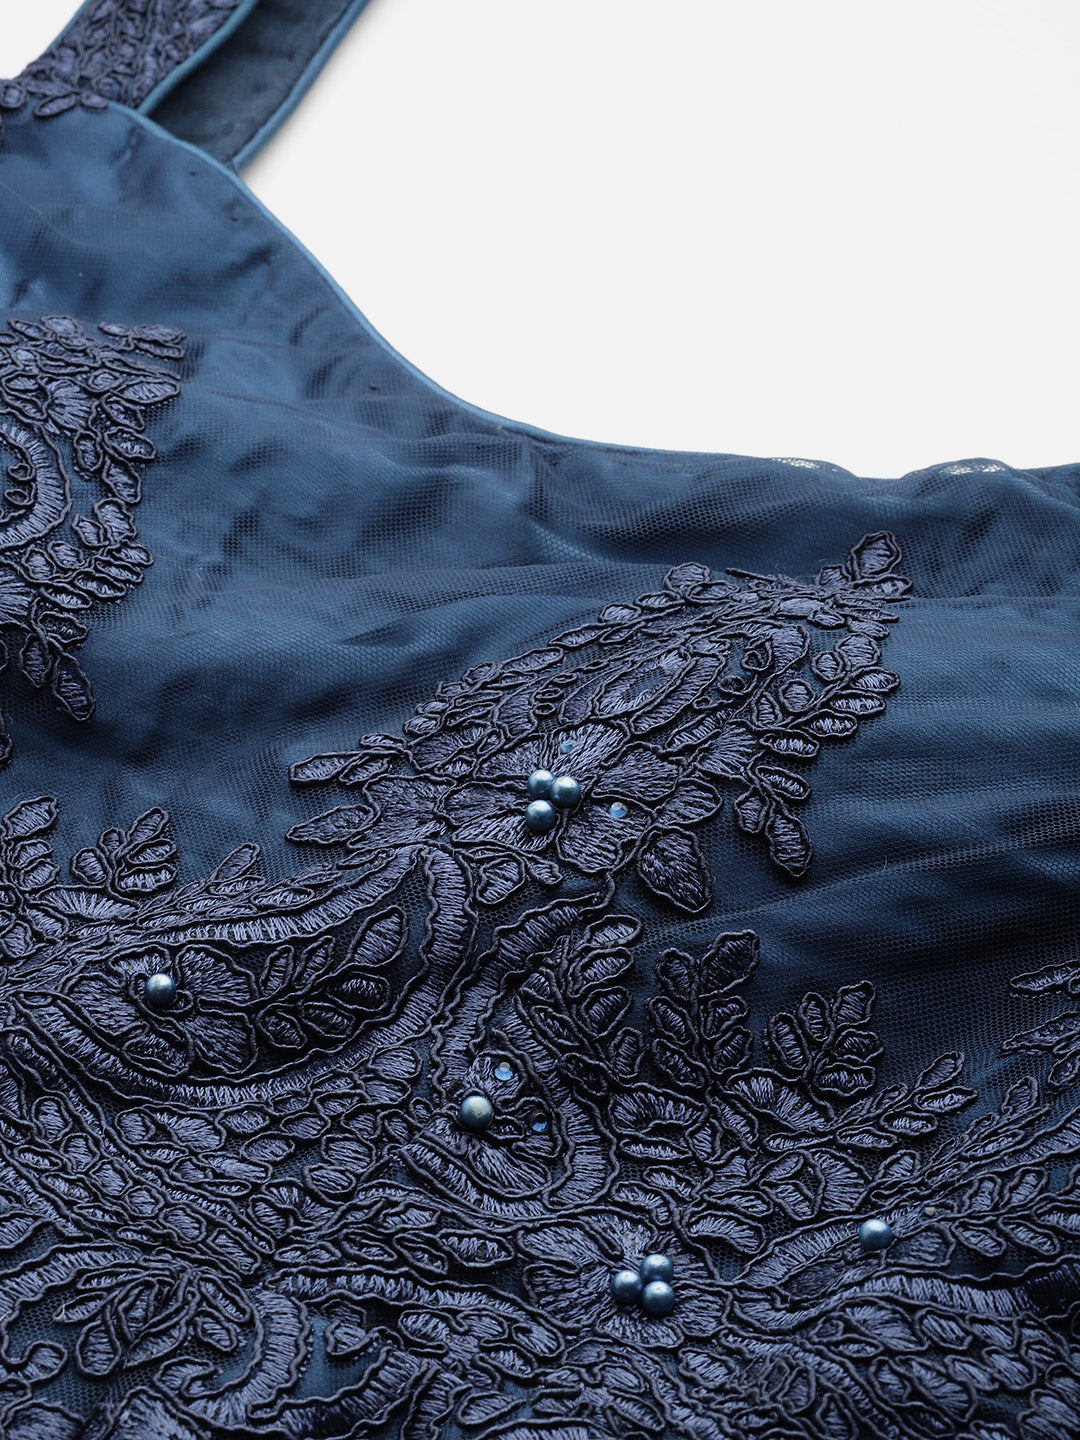 Desginer Blue Net Gown